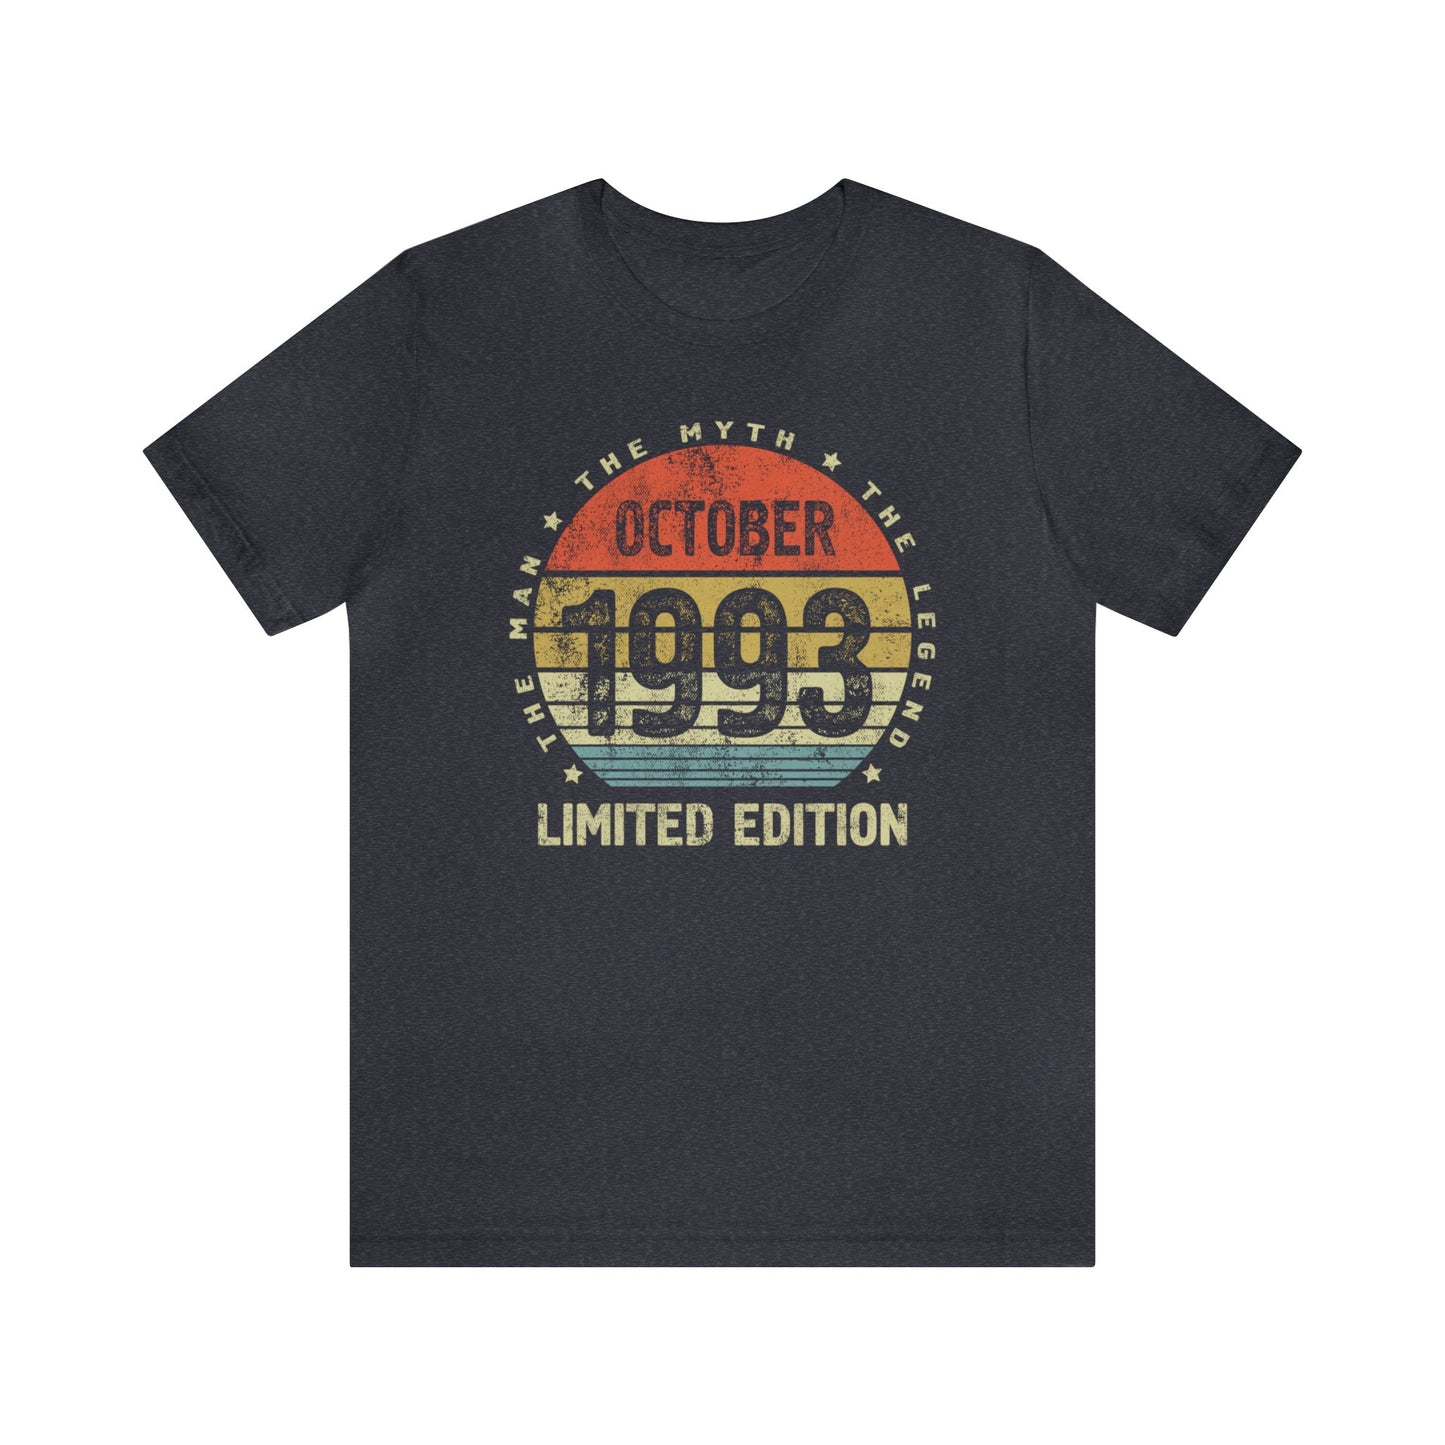 30th birthday gift shirt for men or husband October 1993 birthday gift tshirt for son or brother